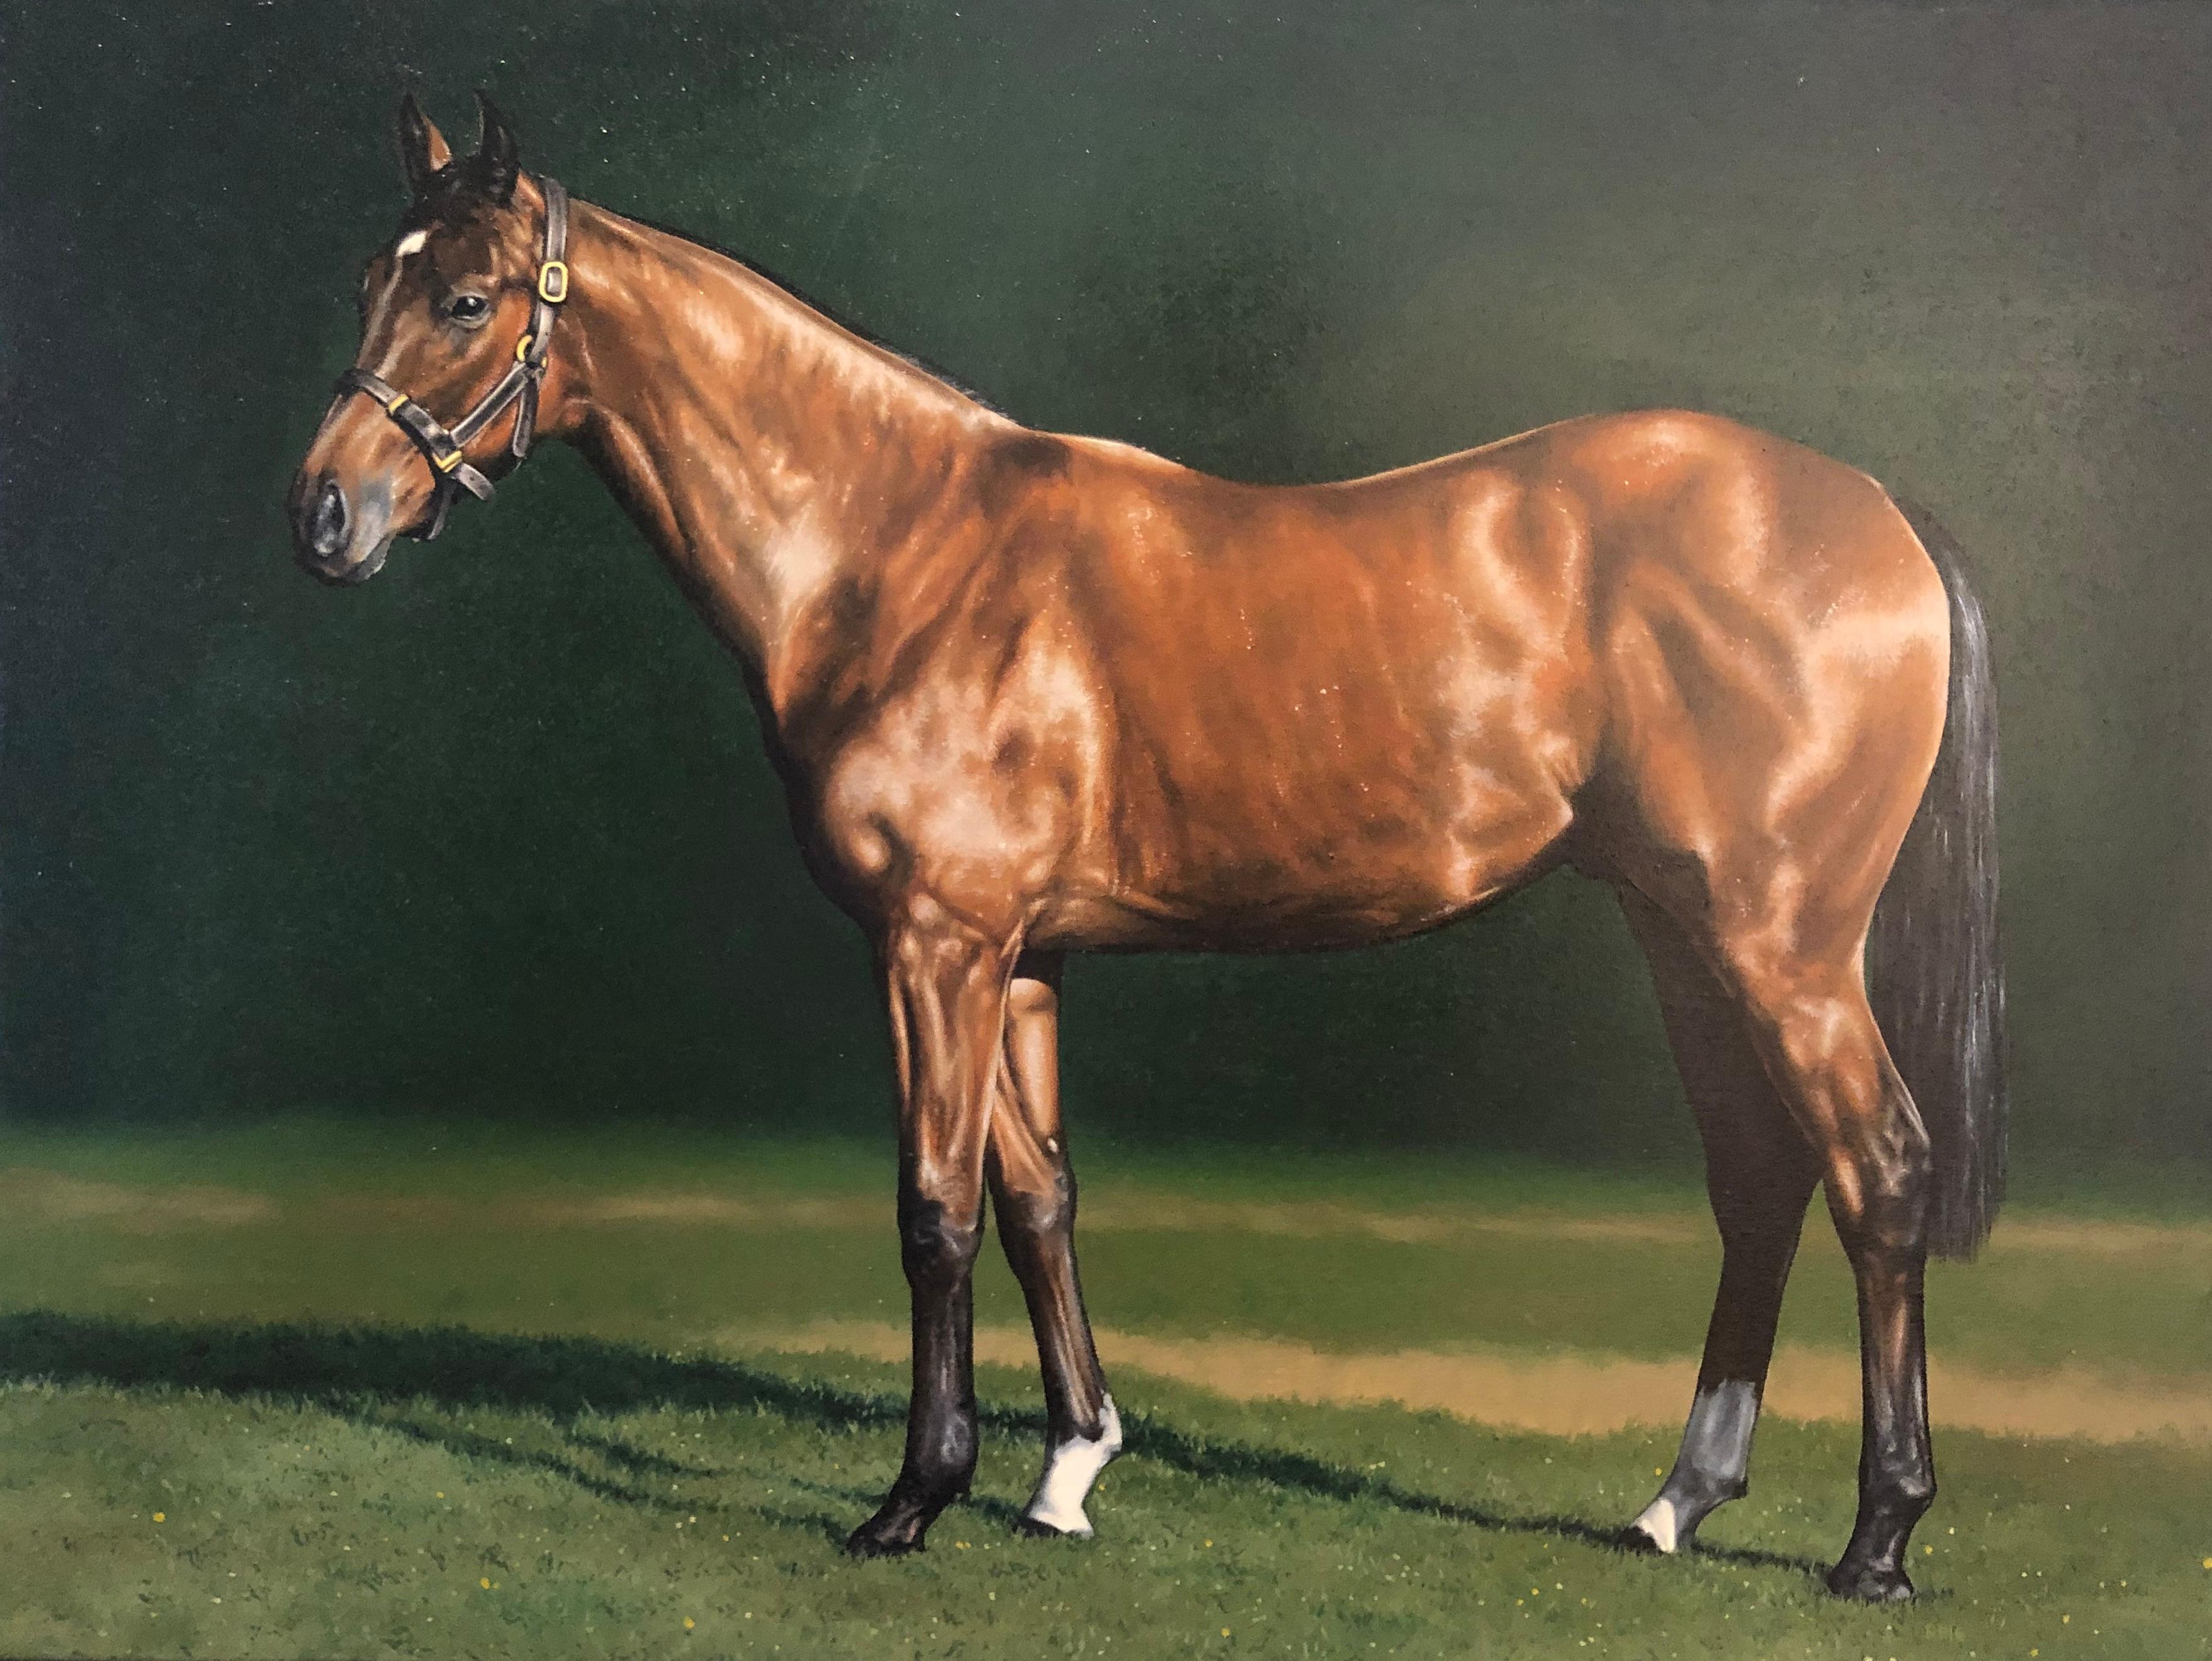 Richard Heisler Animal Painting - Photorealist equestrian painting, "Bay" Inspired by George Stubbs